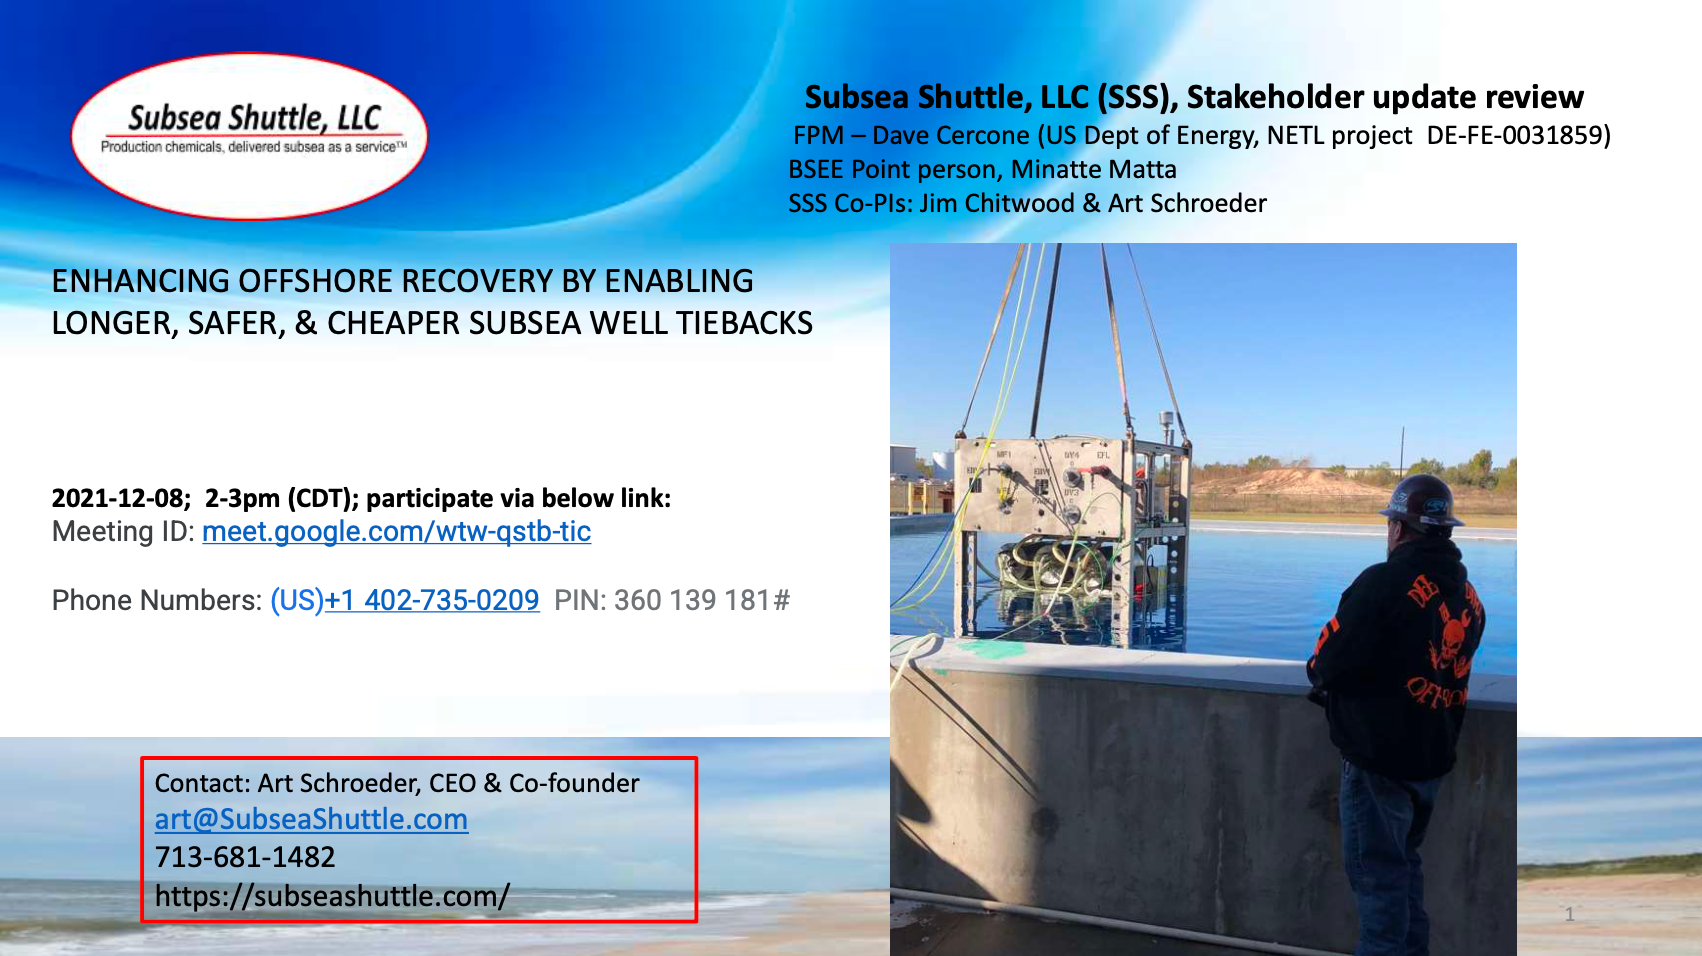 Subsea Shuttle, LLC 2021Q04 stakeholder update